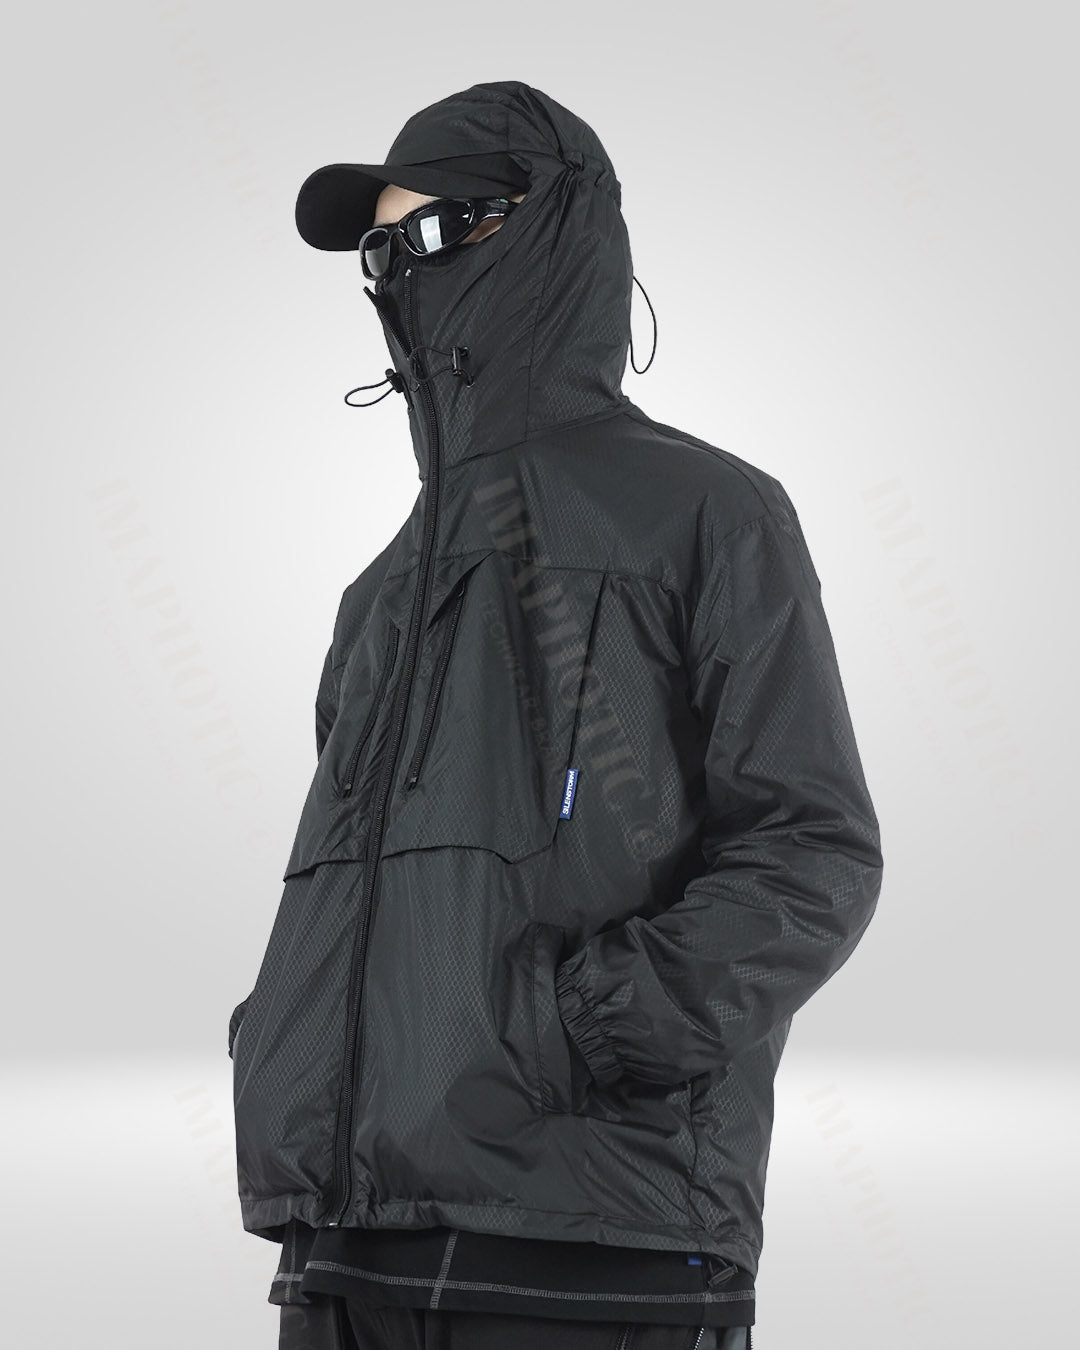 Black Sun Protection Lightweight Jacket - Men's UV Resistant Outdoor Gear